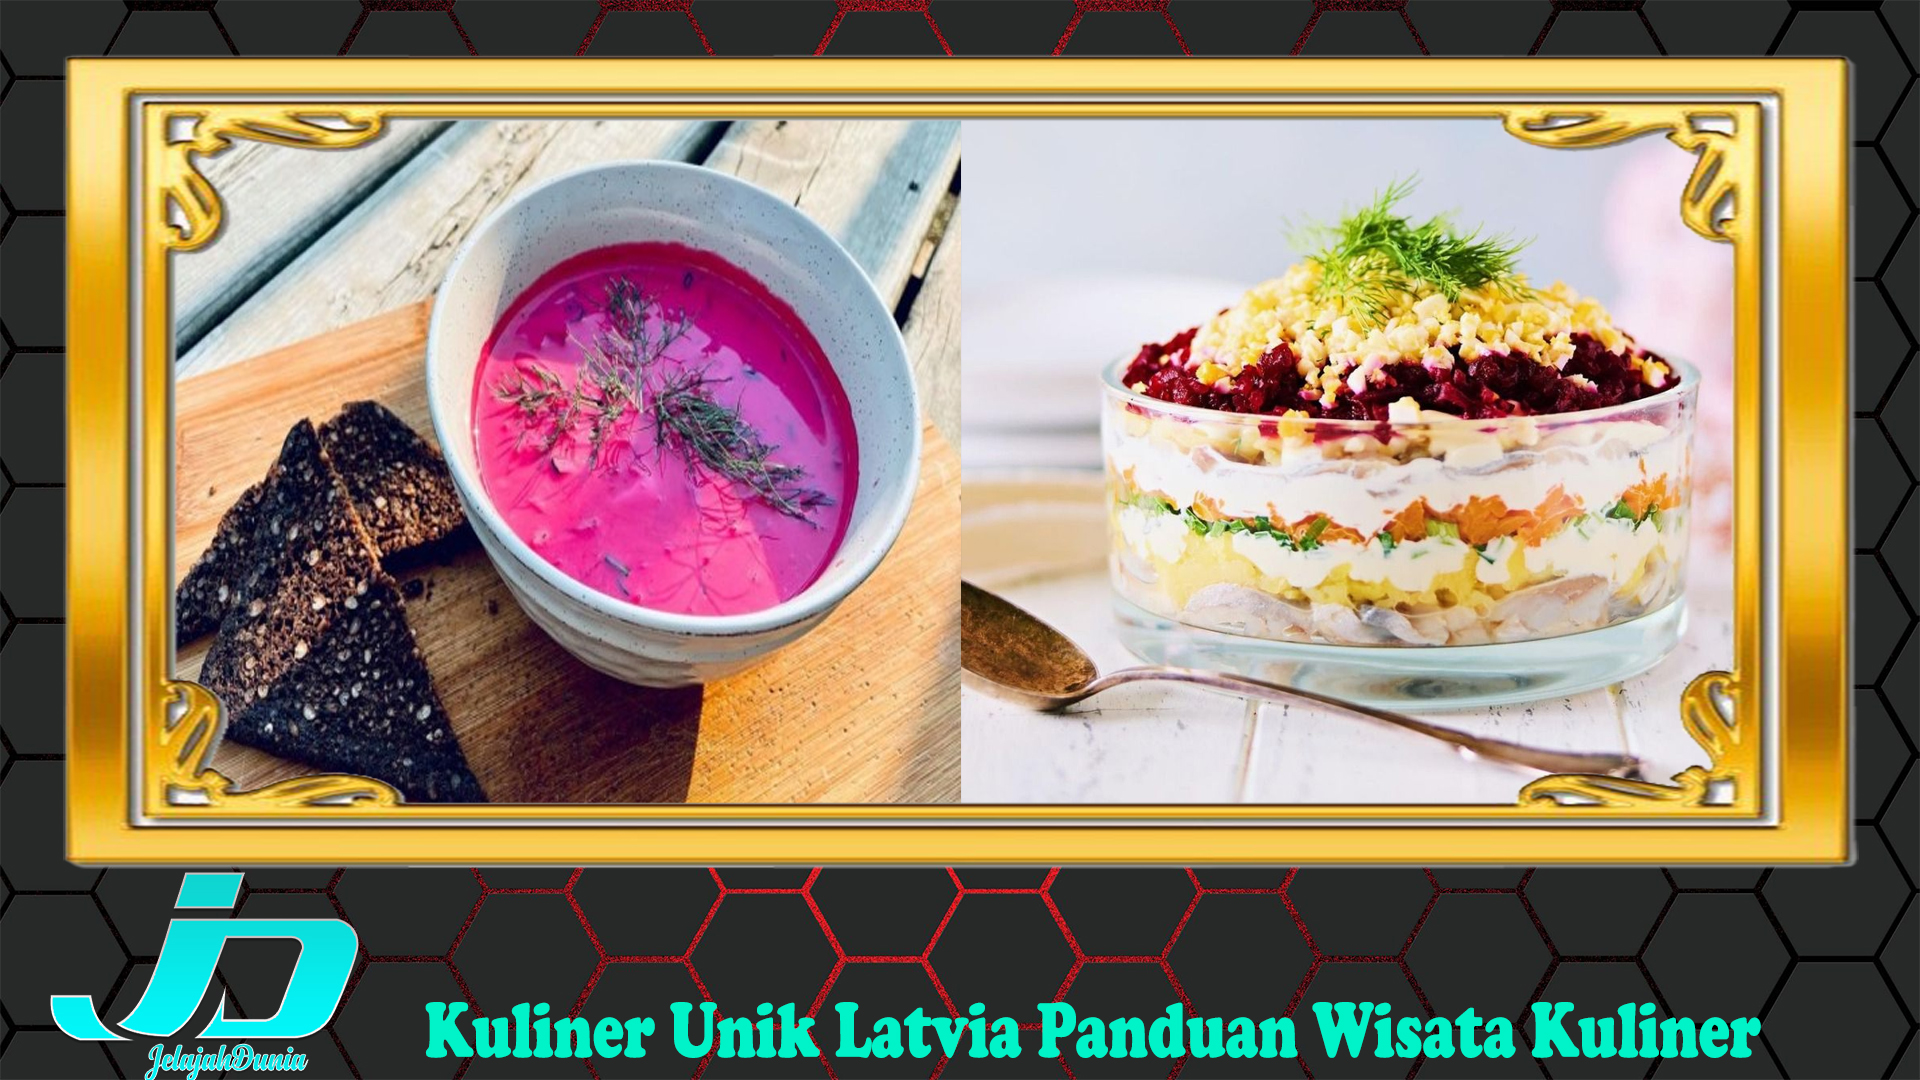 Kuliner Unik Latvia Panduan Wisata Kuliner